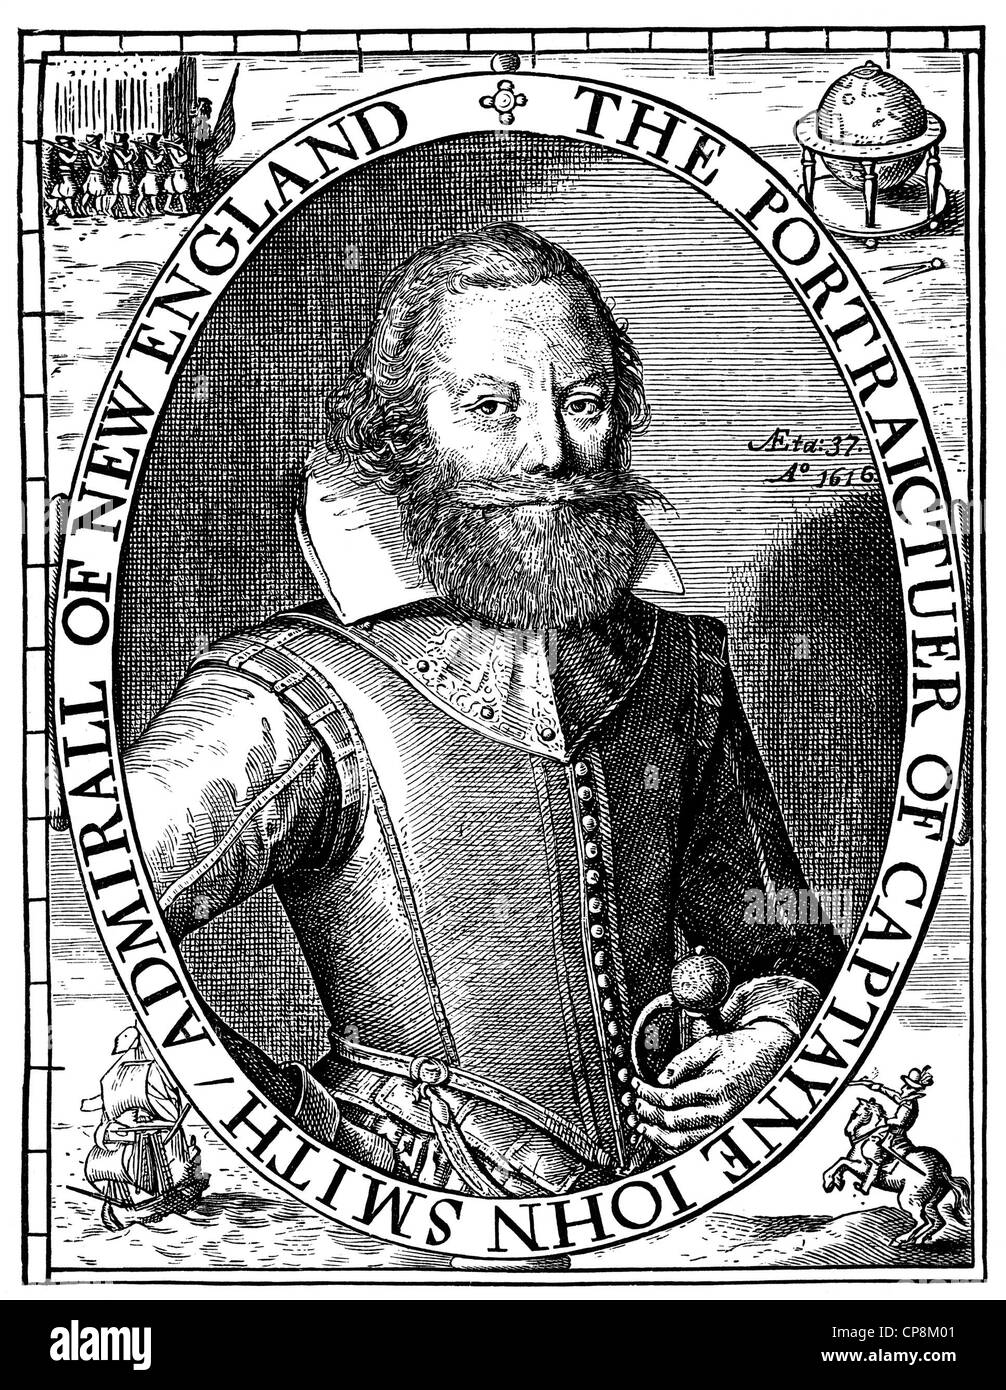 Il capitano John Smith, 1579 - 1631, colono inglese in America, Historische Zeichnung aus dem 19. Jahrhundert, Ritratto von Captai Foto Stock